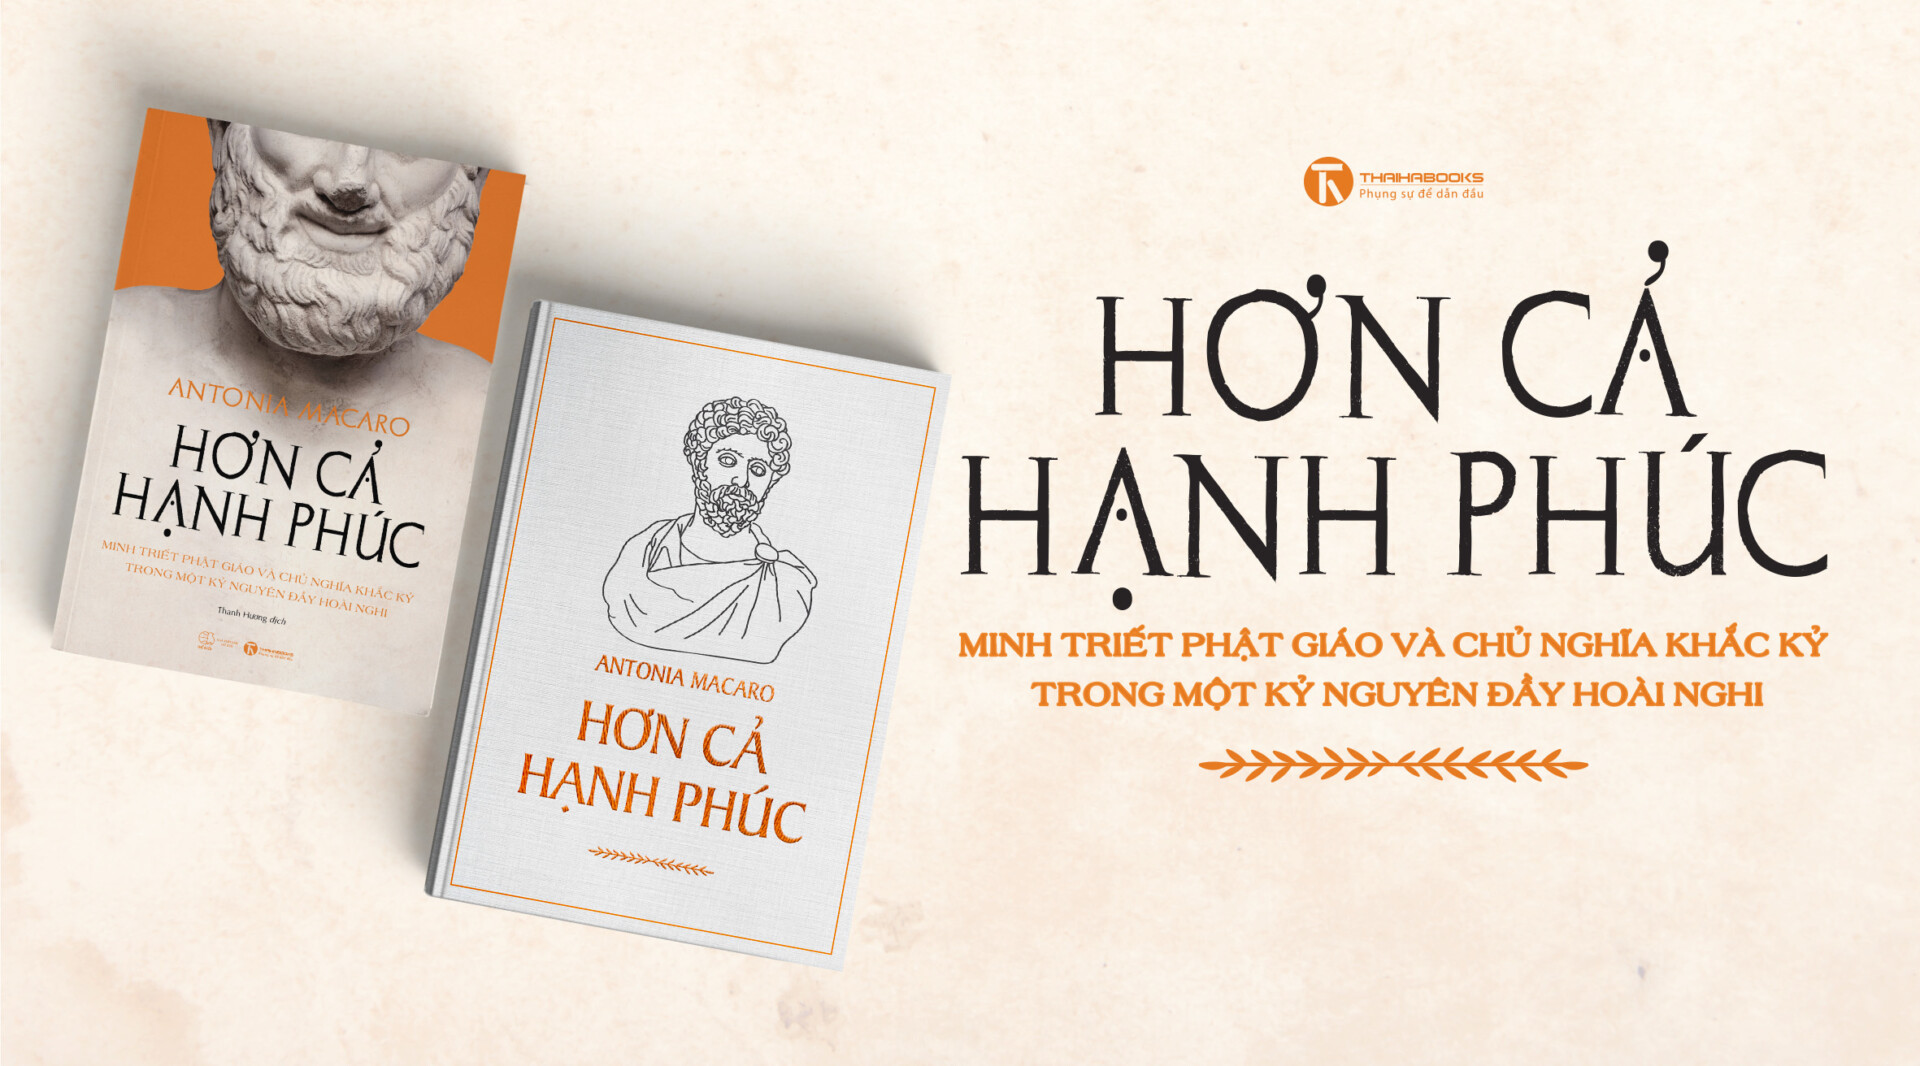 Hon Ca Hanh Phuc 1440x800px 2